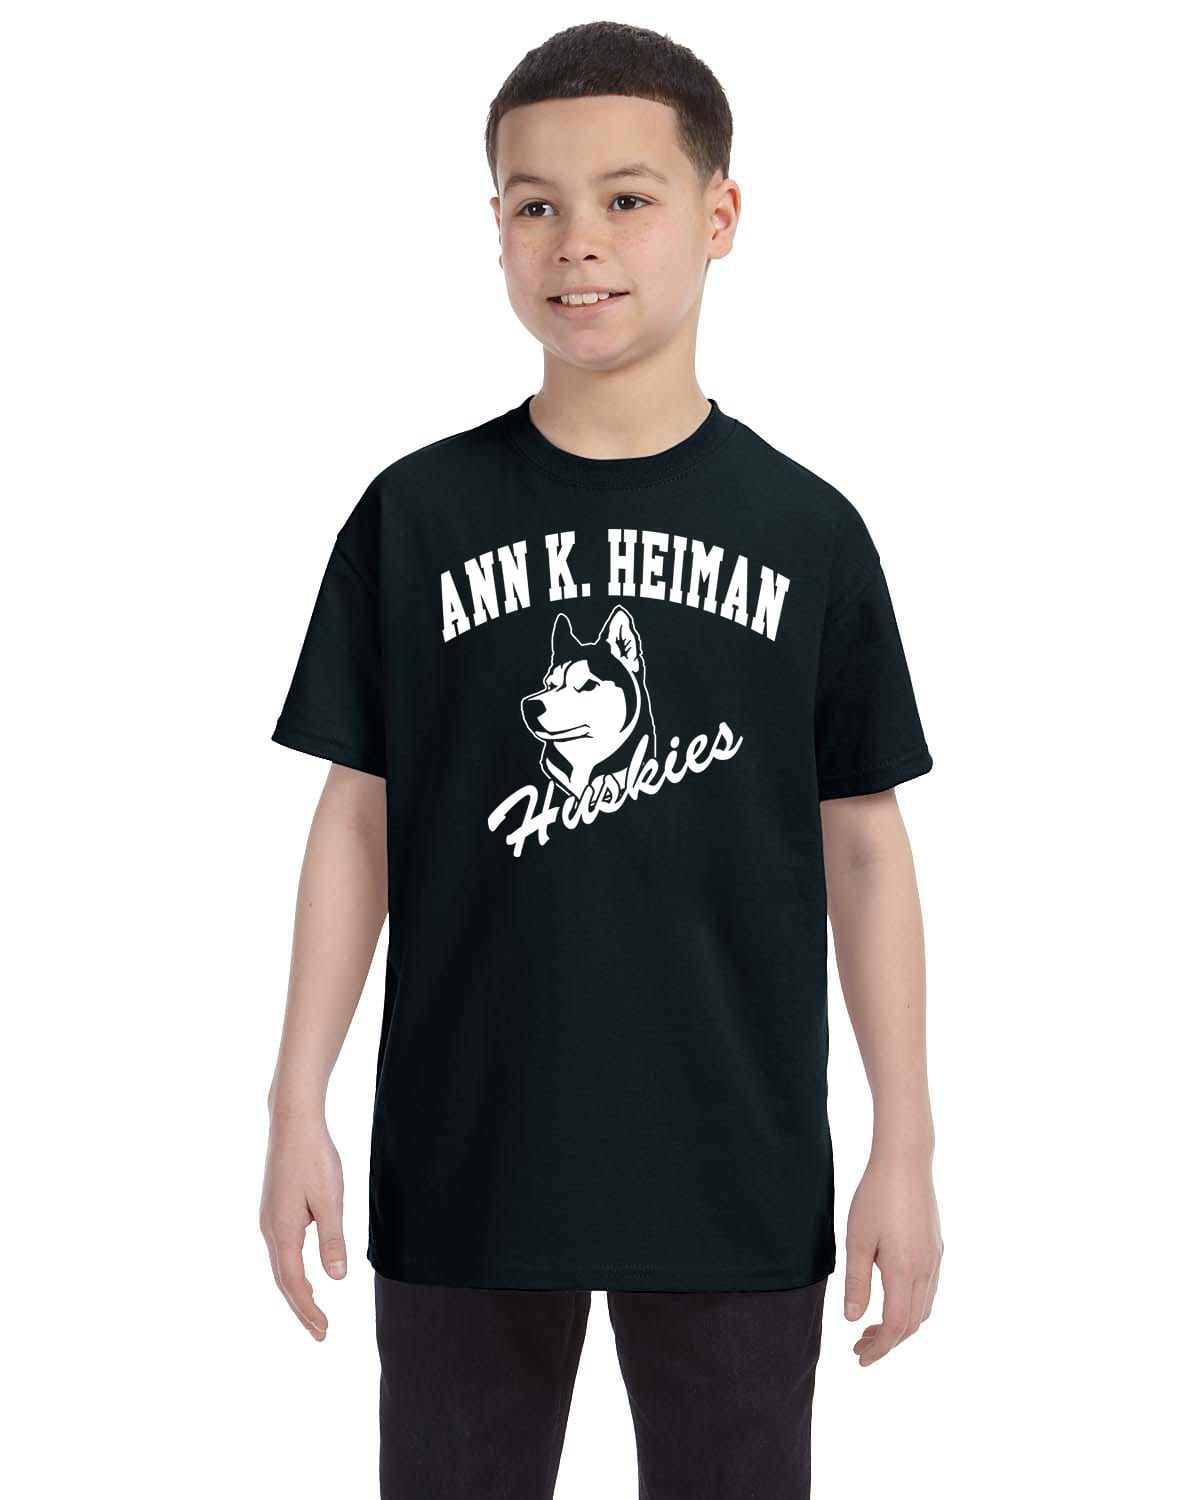 Heiman Elementary School Youth Black Short Sleeve Cotton T-shirt